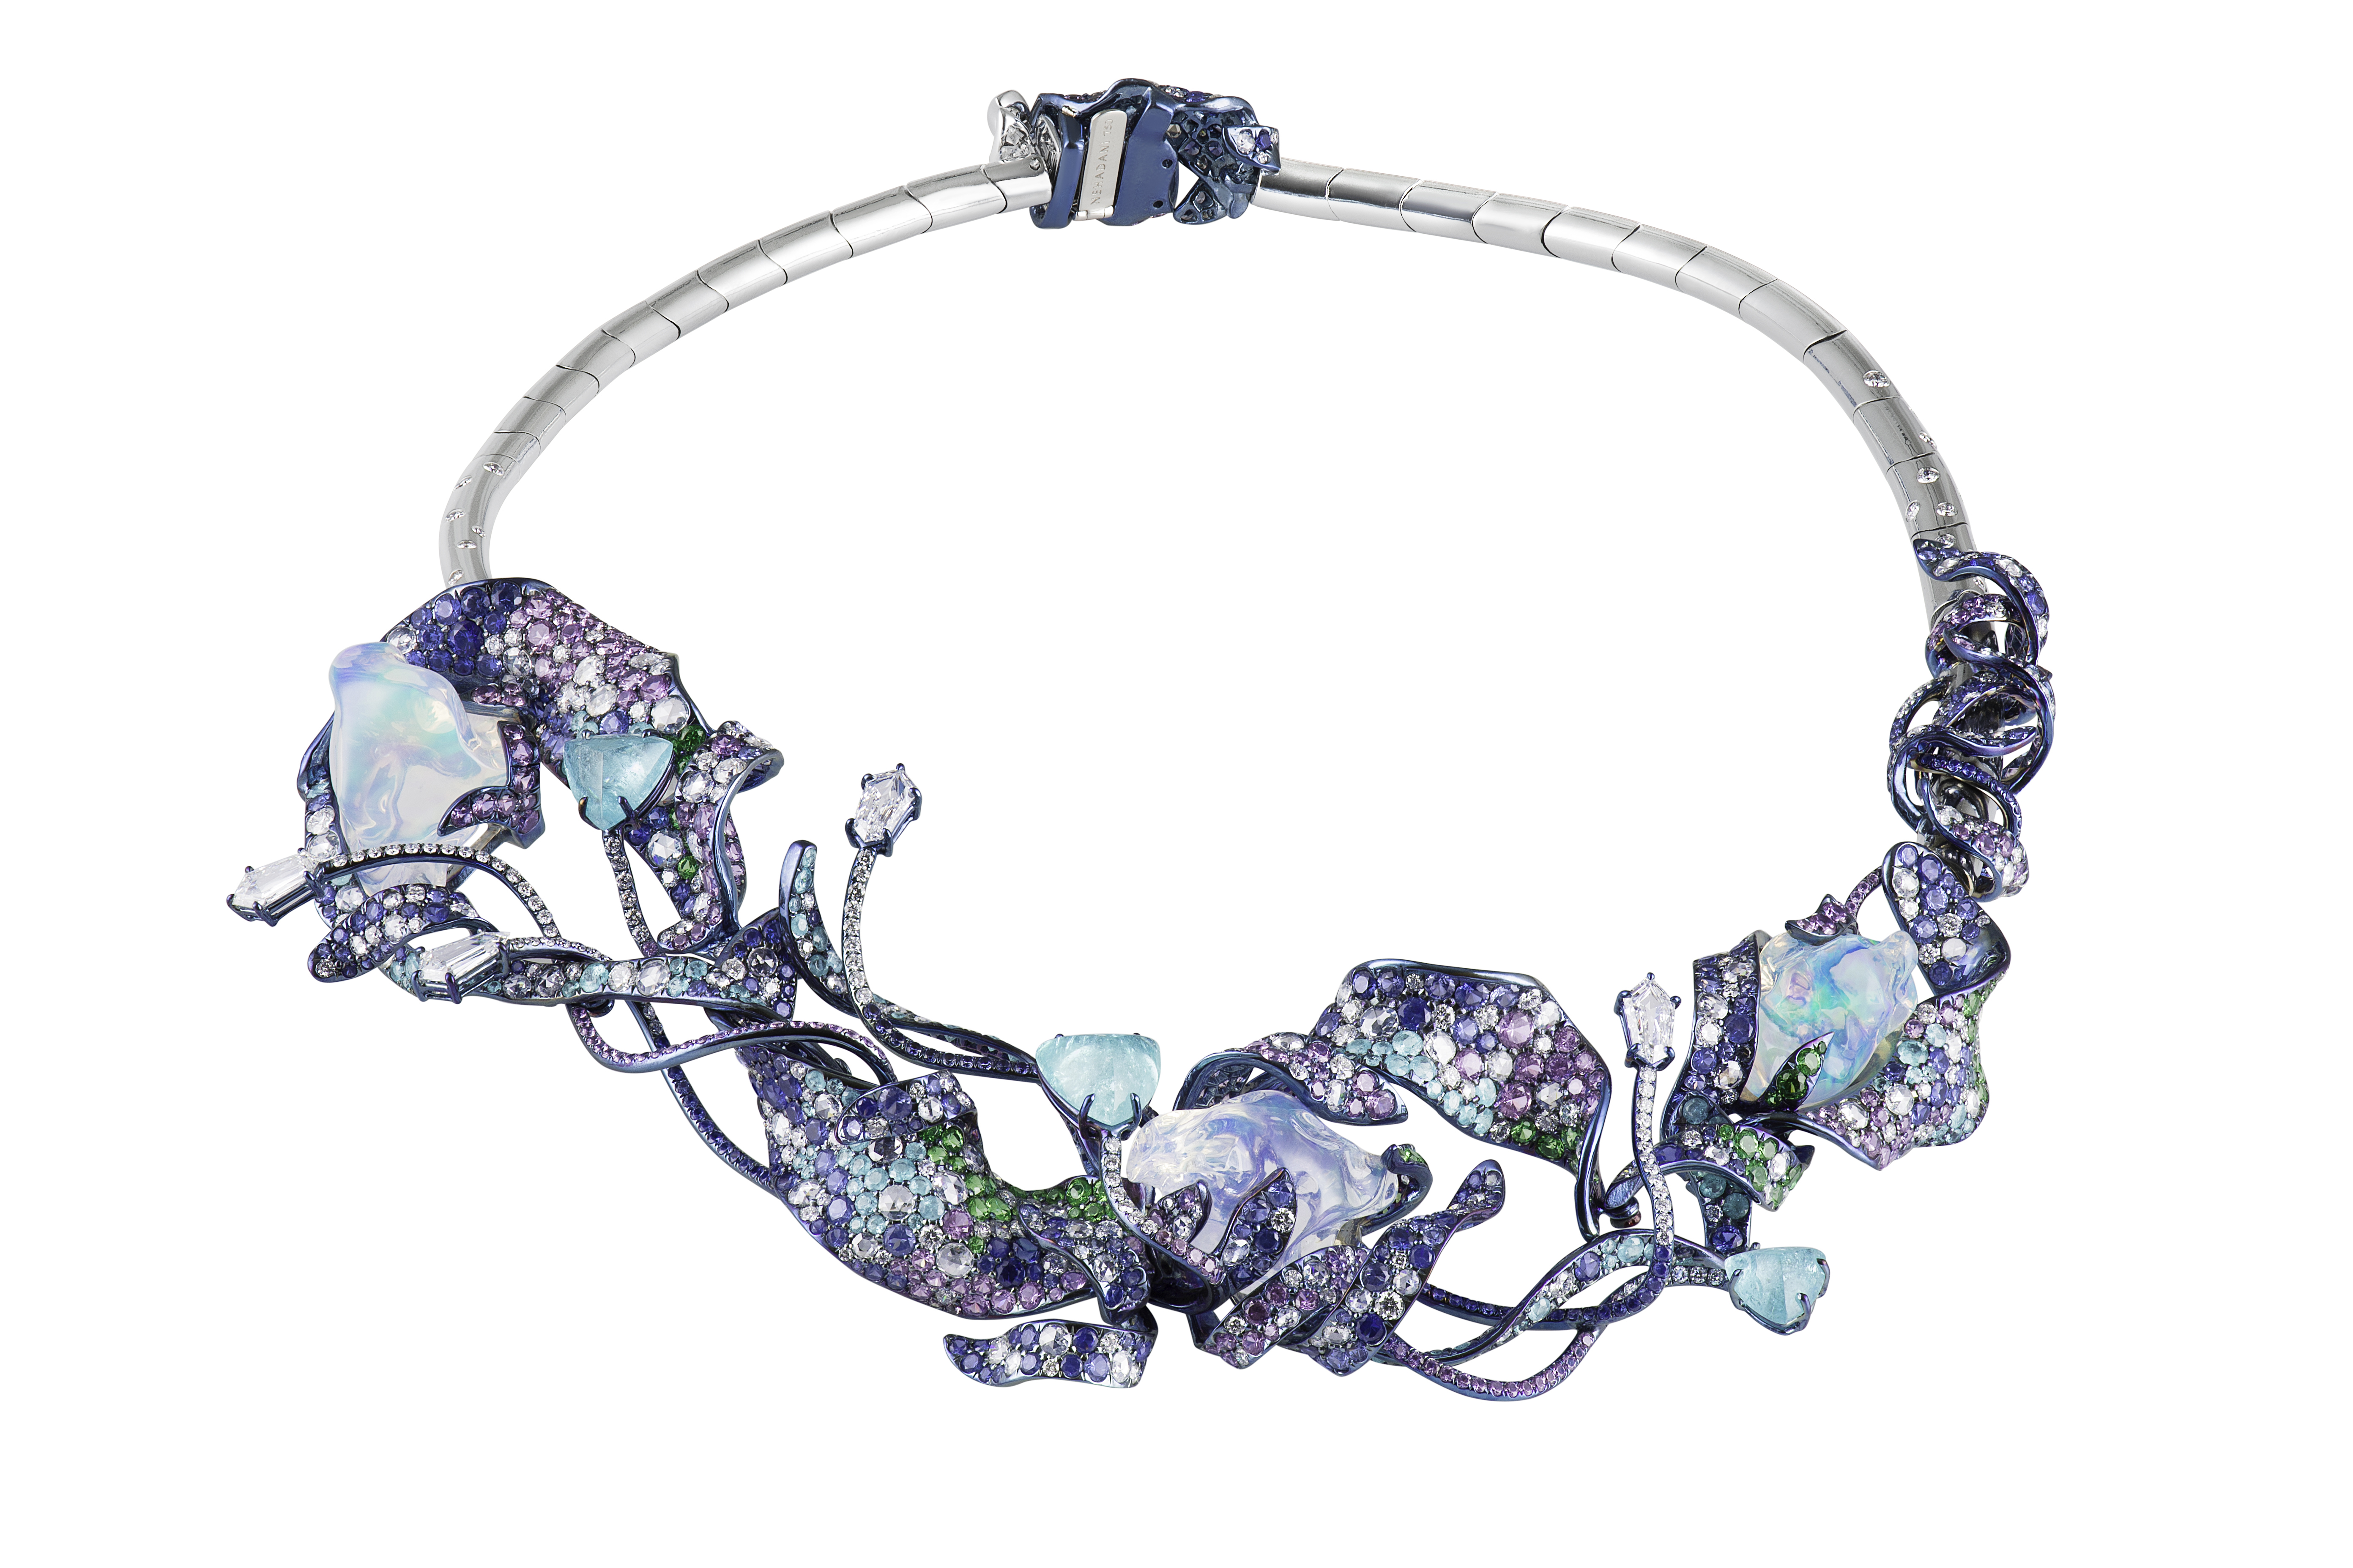 Neha Dani Shristi collection Vaneesha necklace with water opals, diamonds, Paraiba tourmalines, blue and purple sapphires and tsavorite garnets in titanium